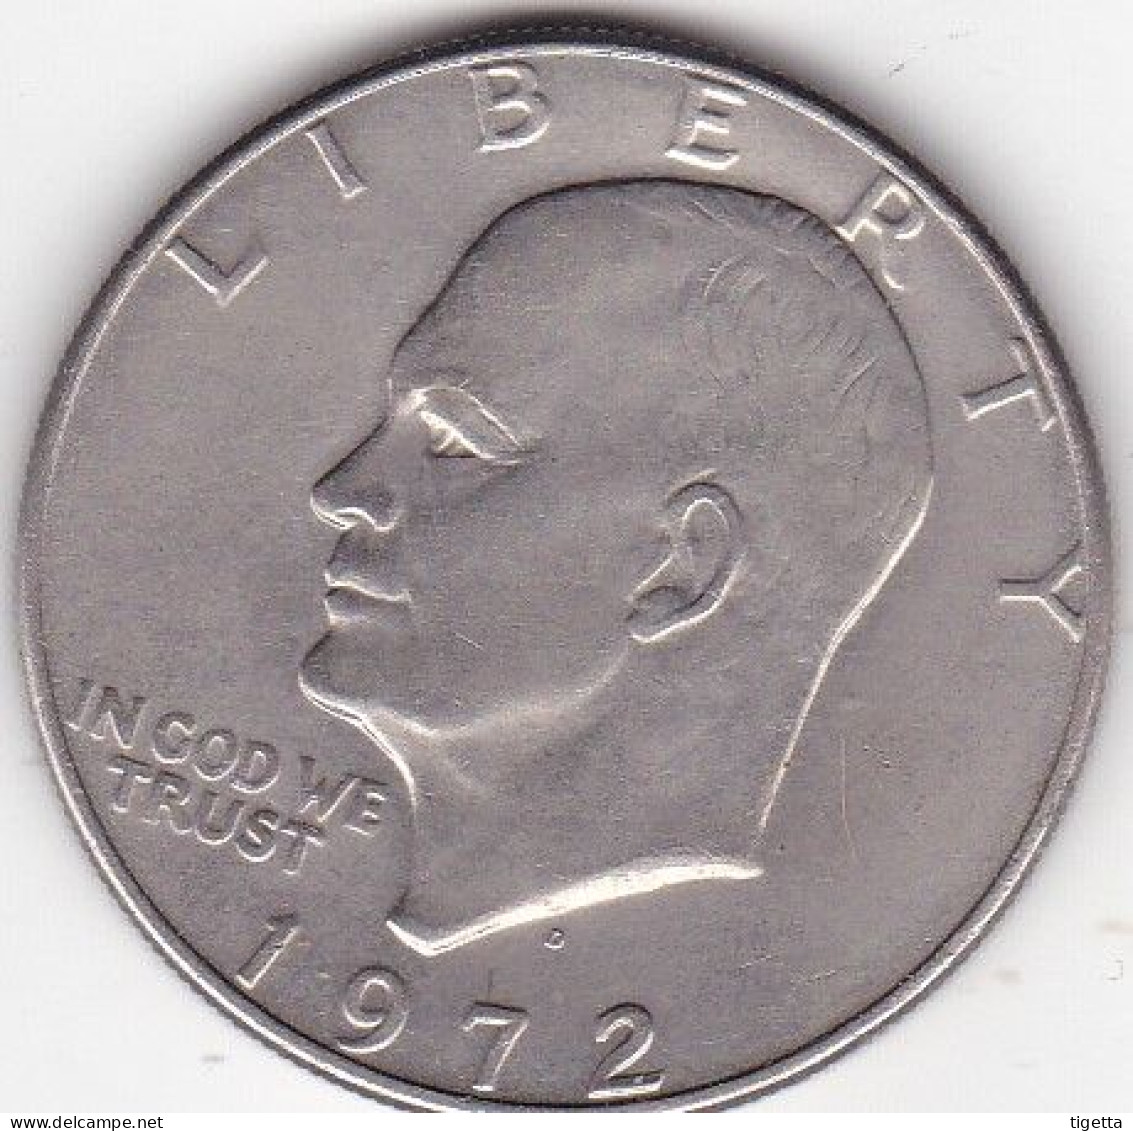 STATI UNITI-USA  1 $ EISENHOWER ANNO 1972 D - 1971-1978: Eisenhower